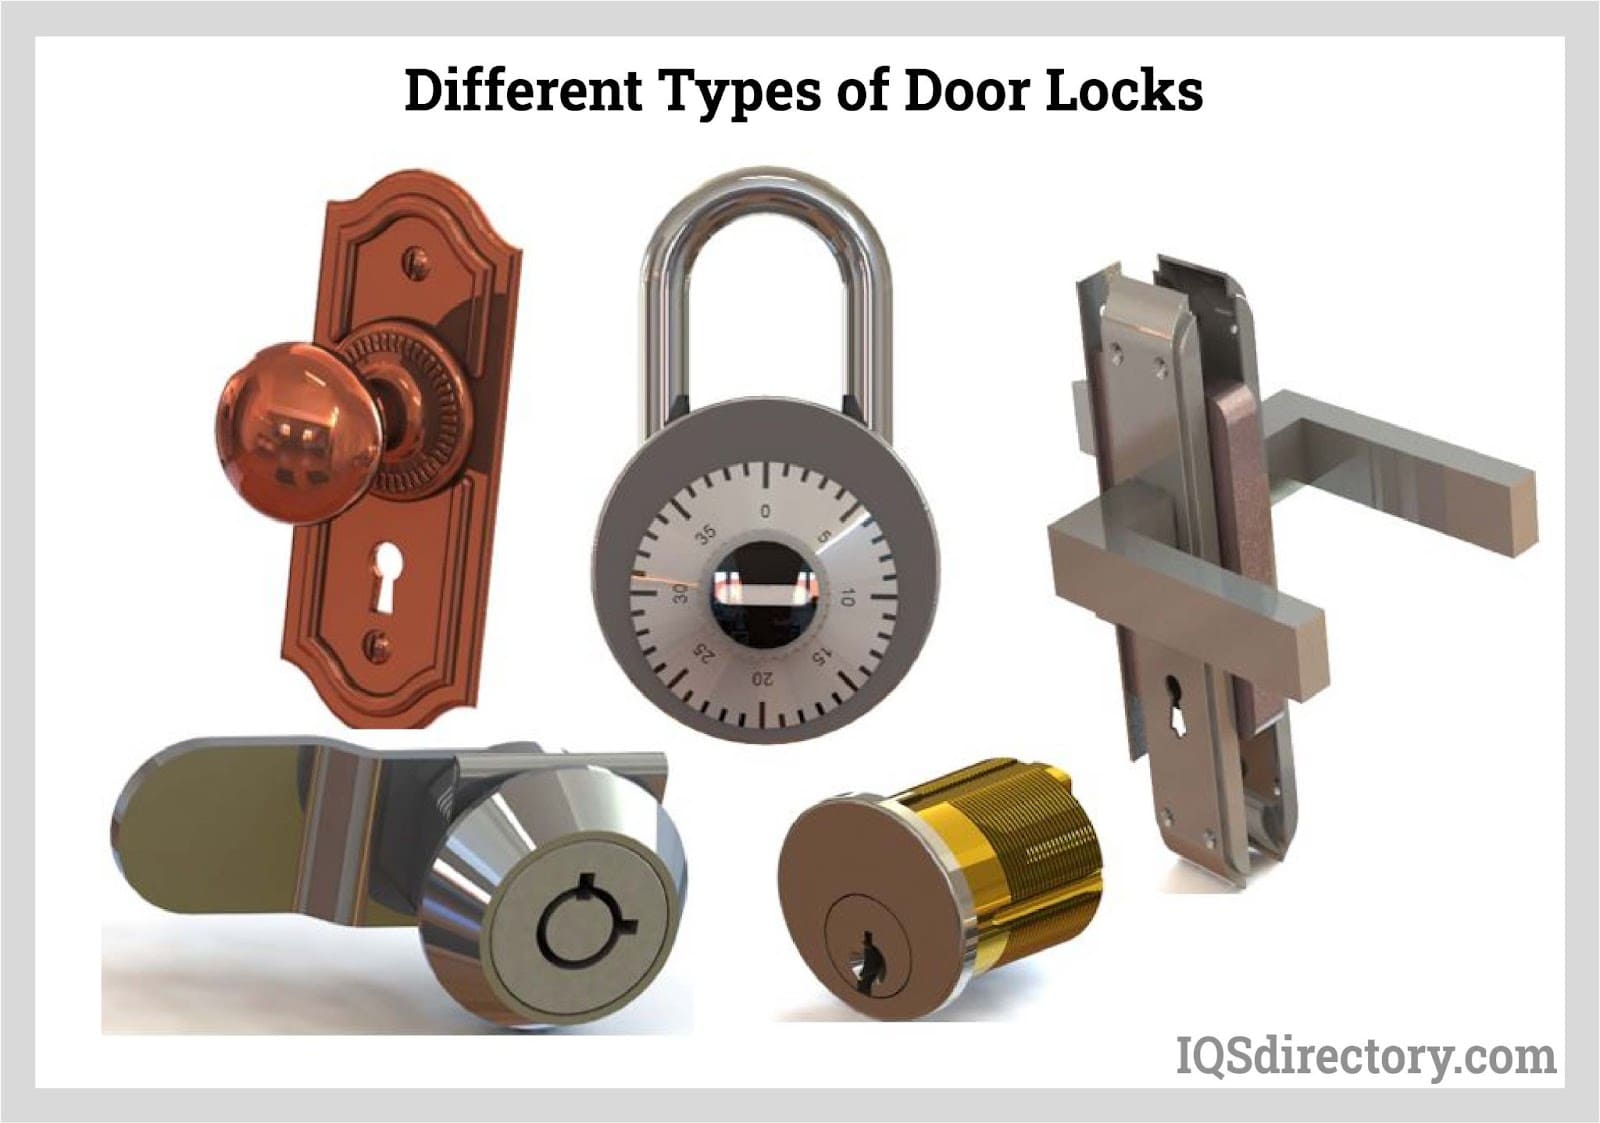 Lock, Types, Mechanisms & Benefits